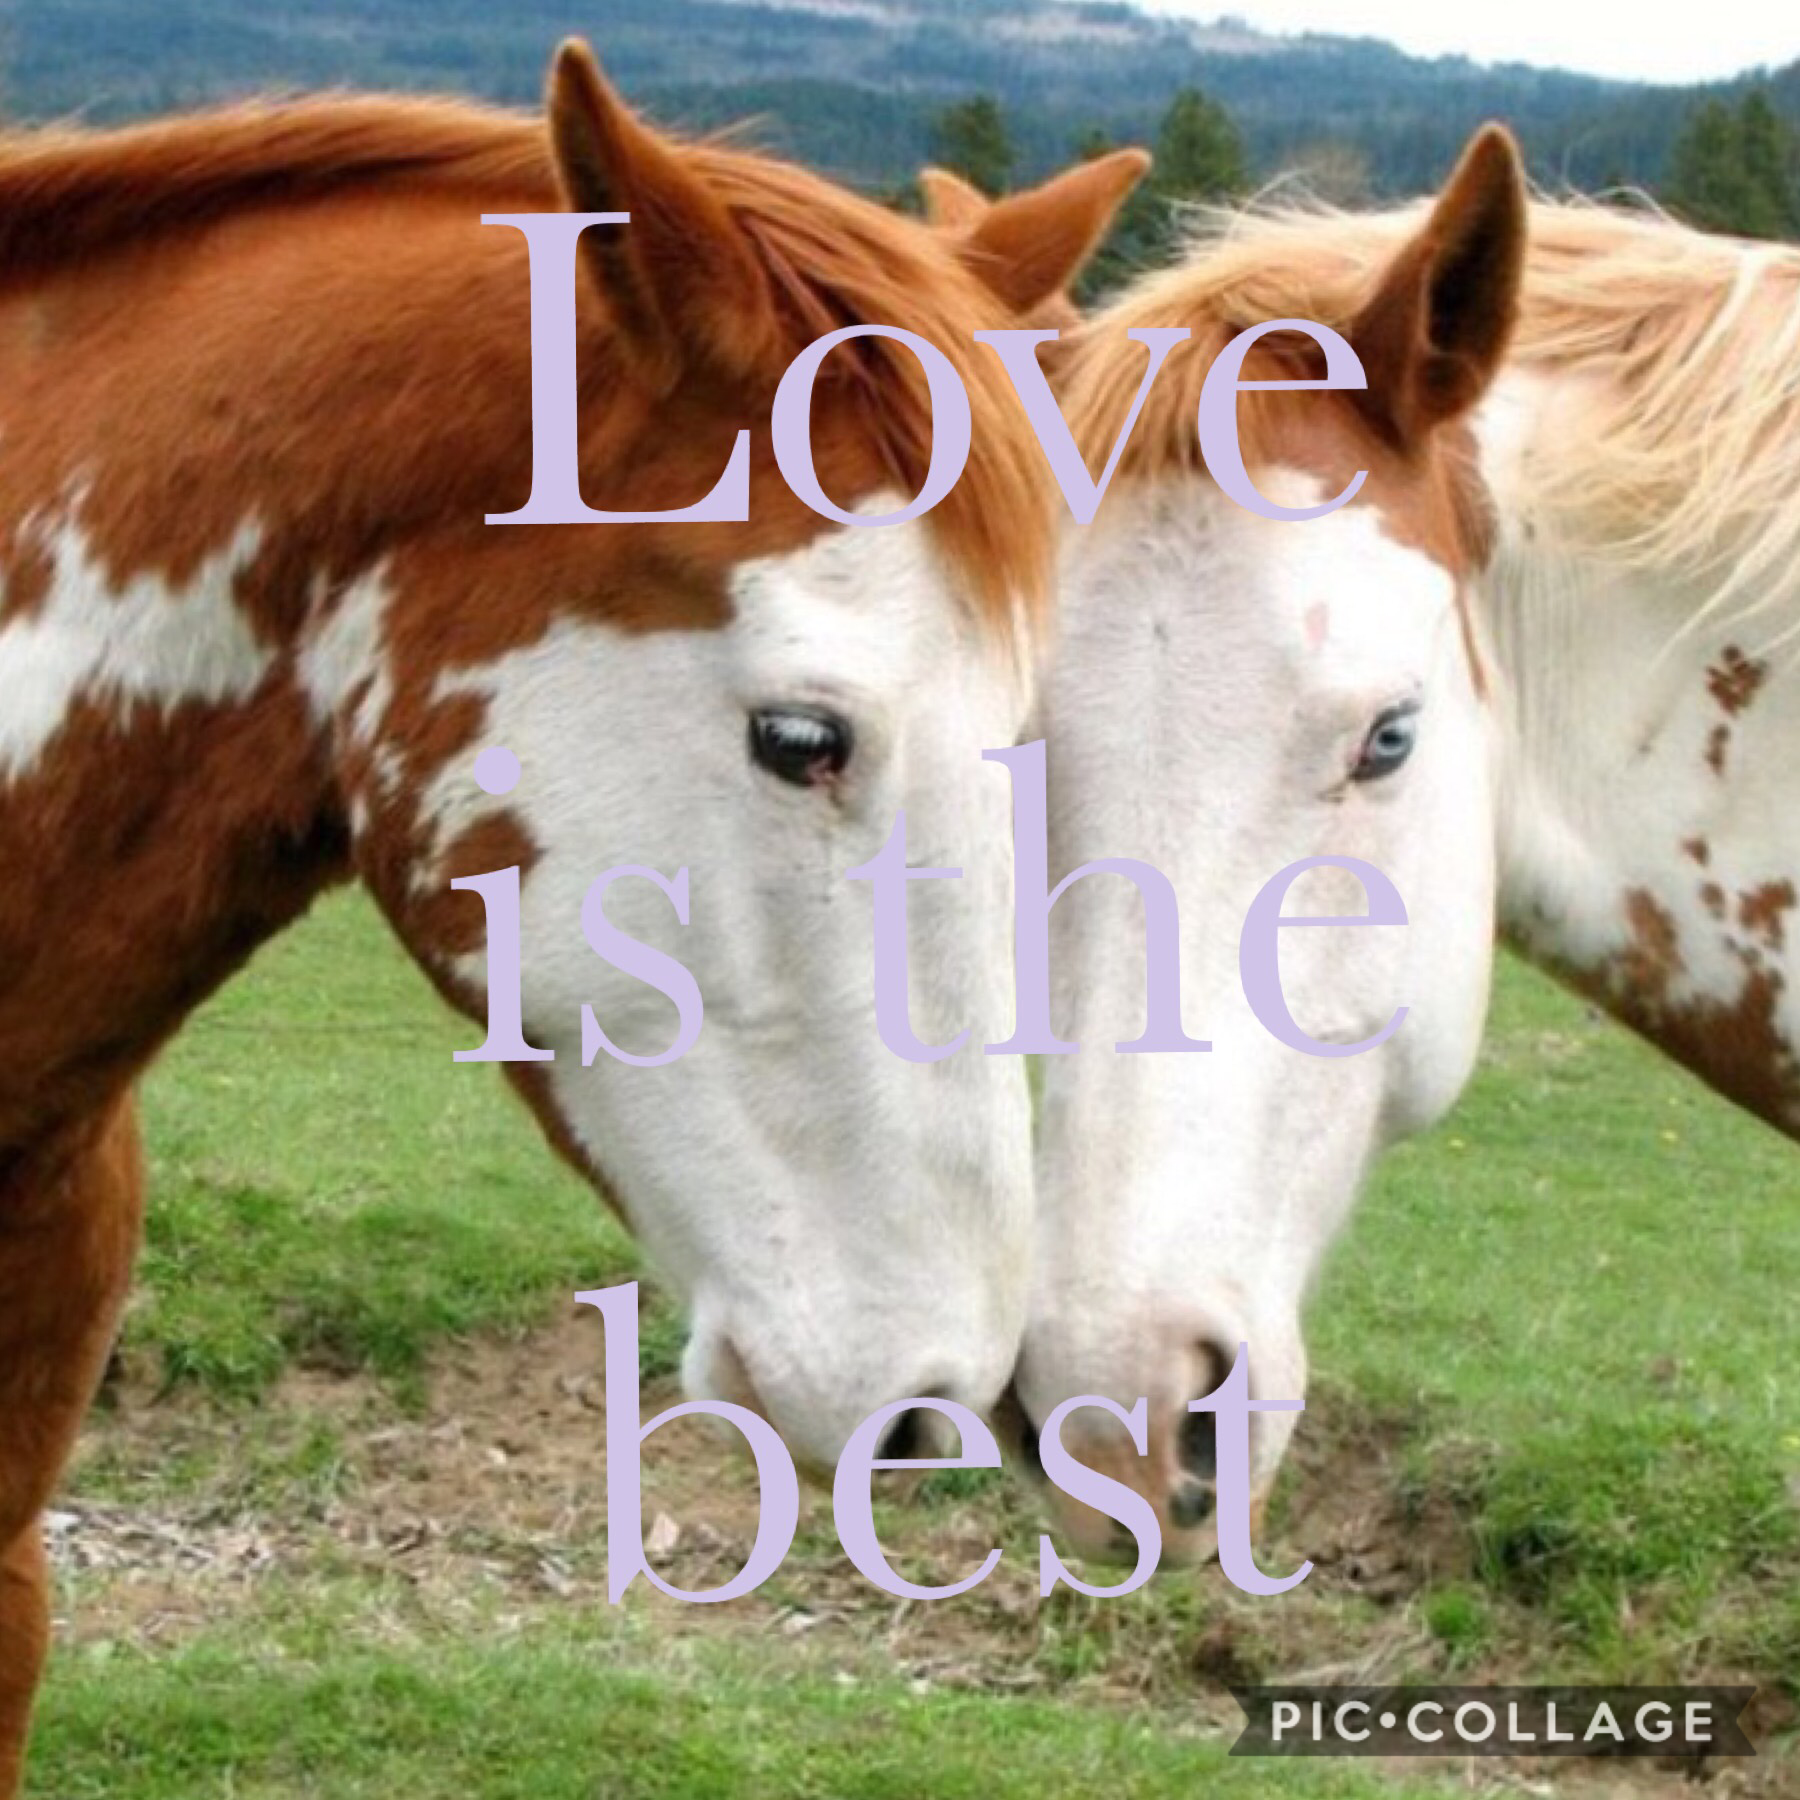 Love horses 🐴 